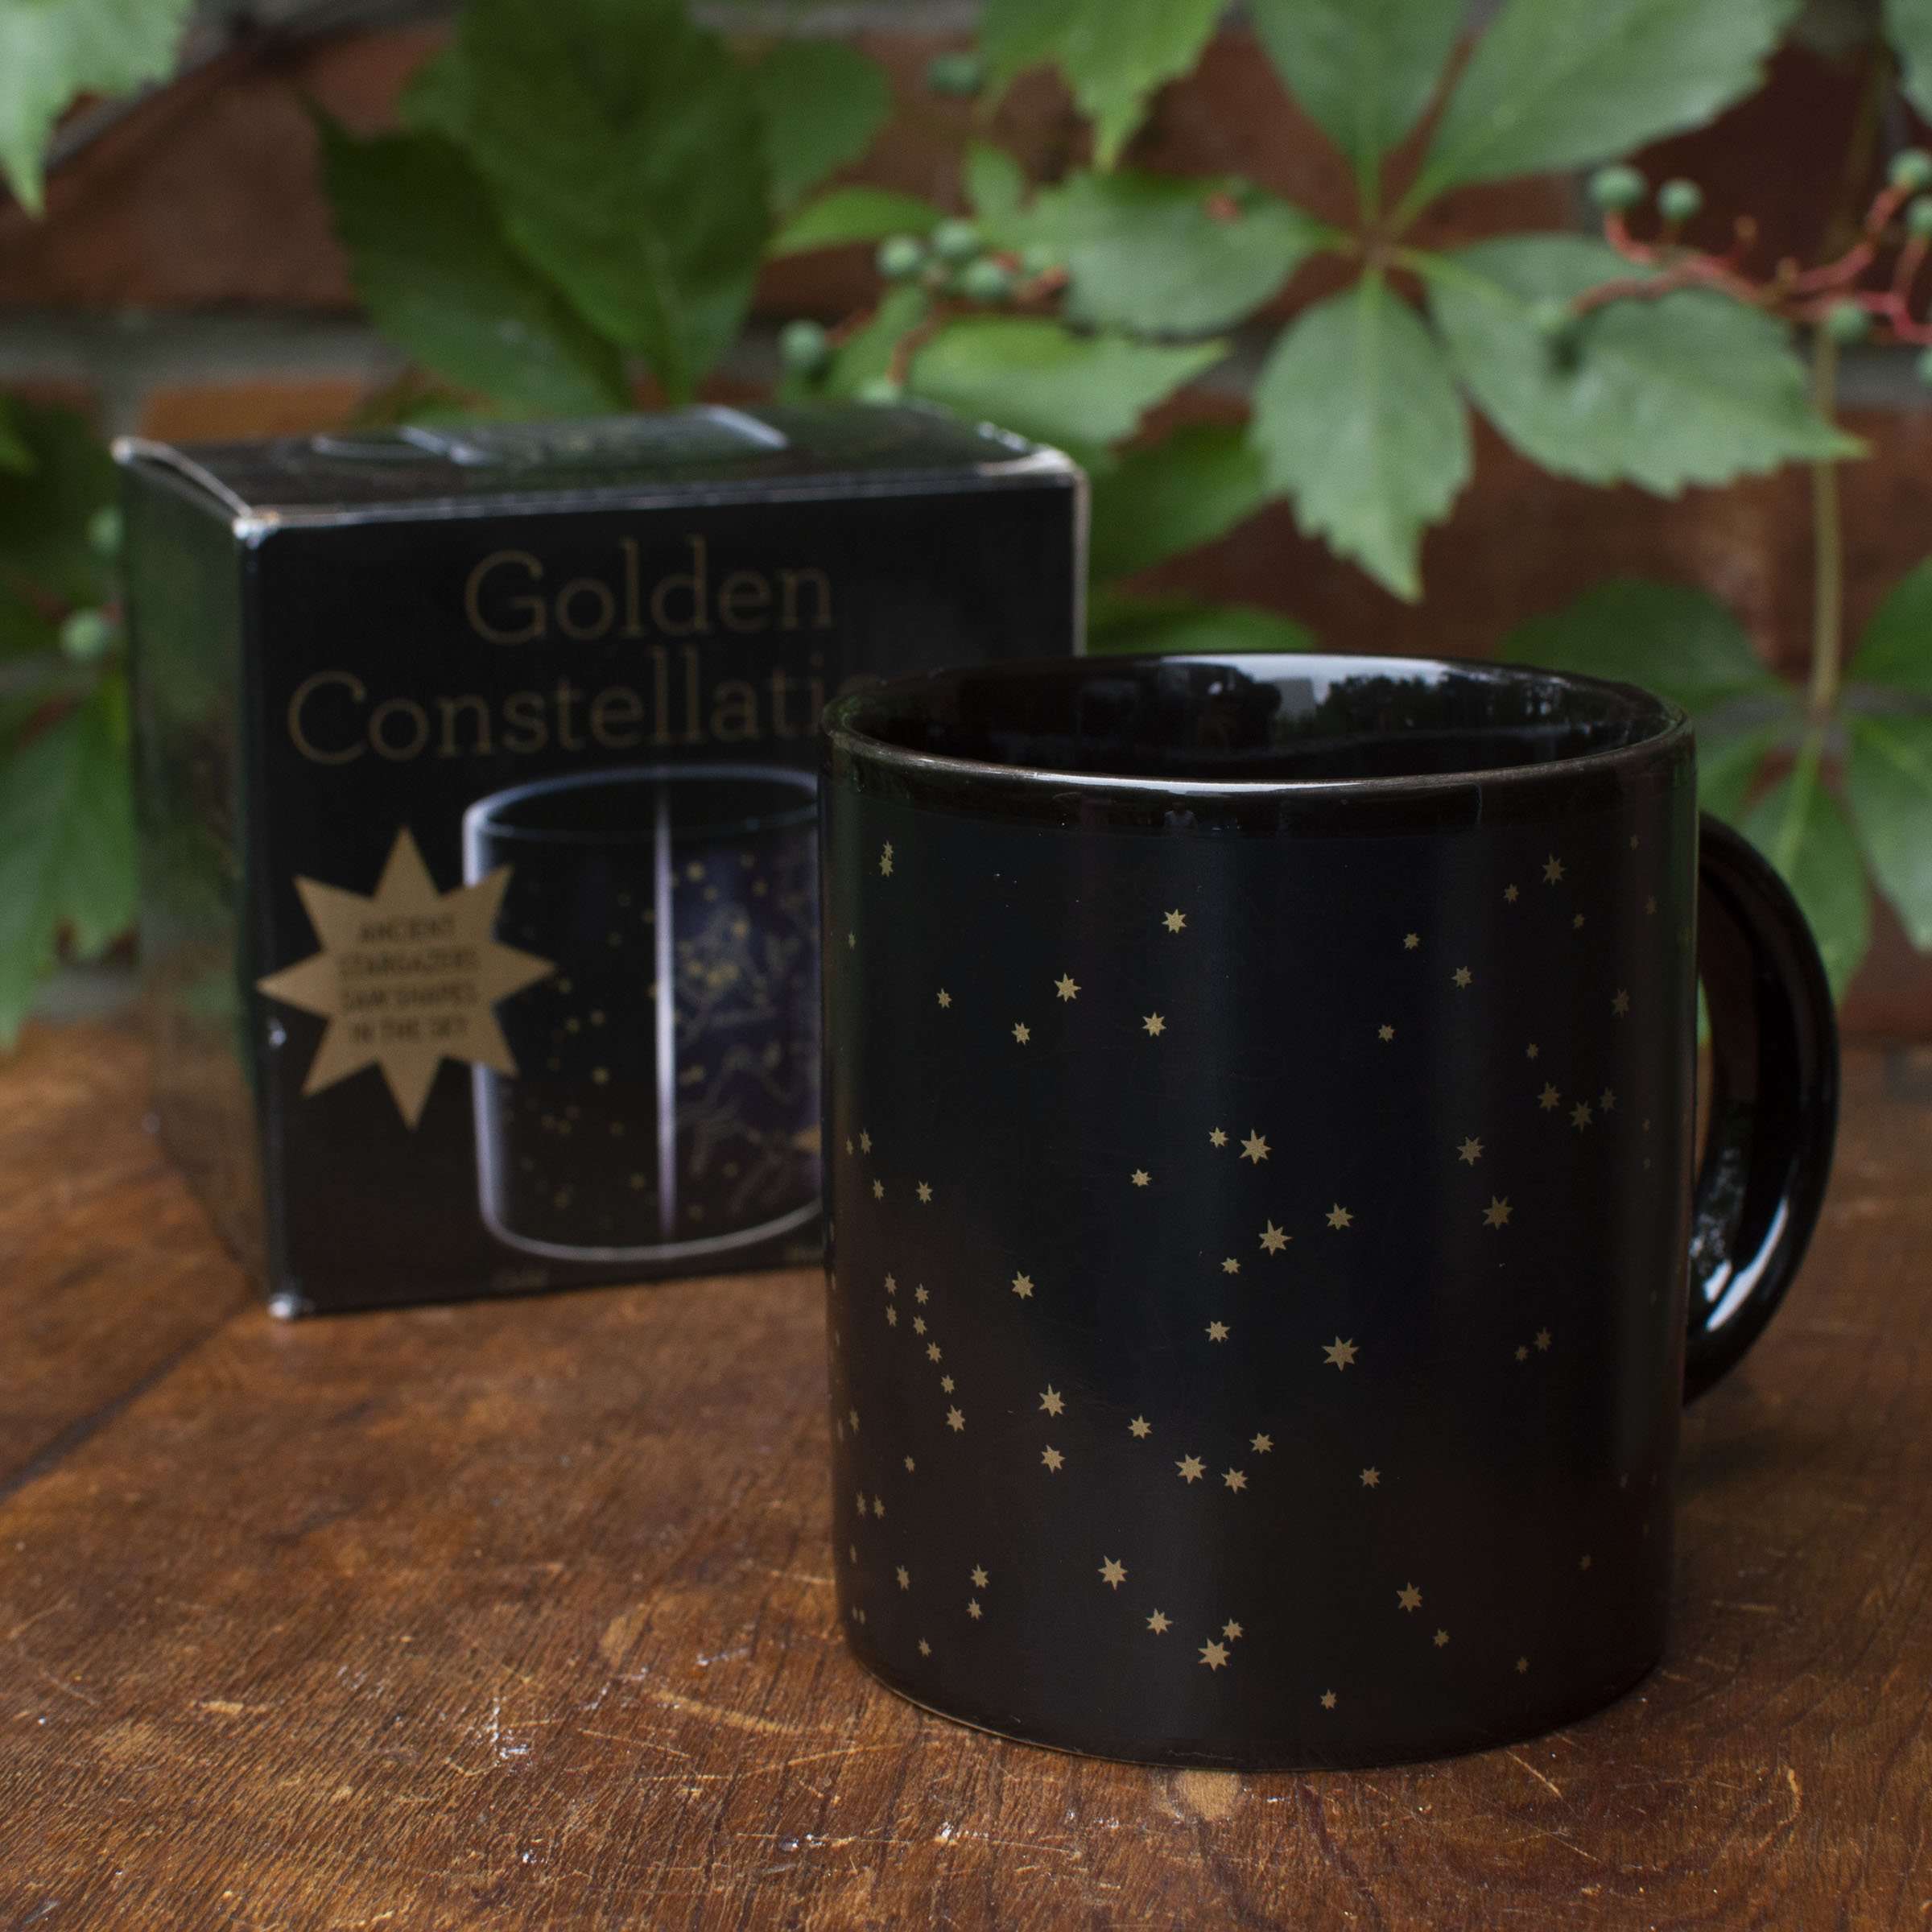 Constellation Heat Change Mug